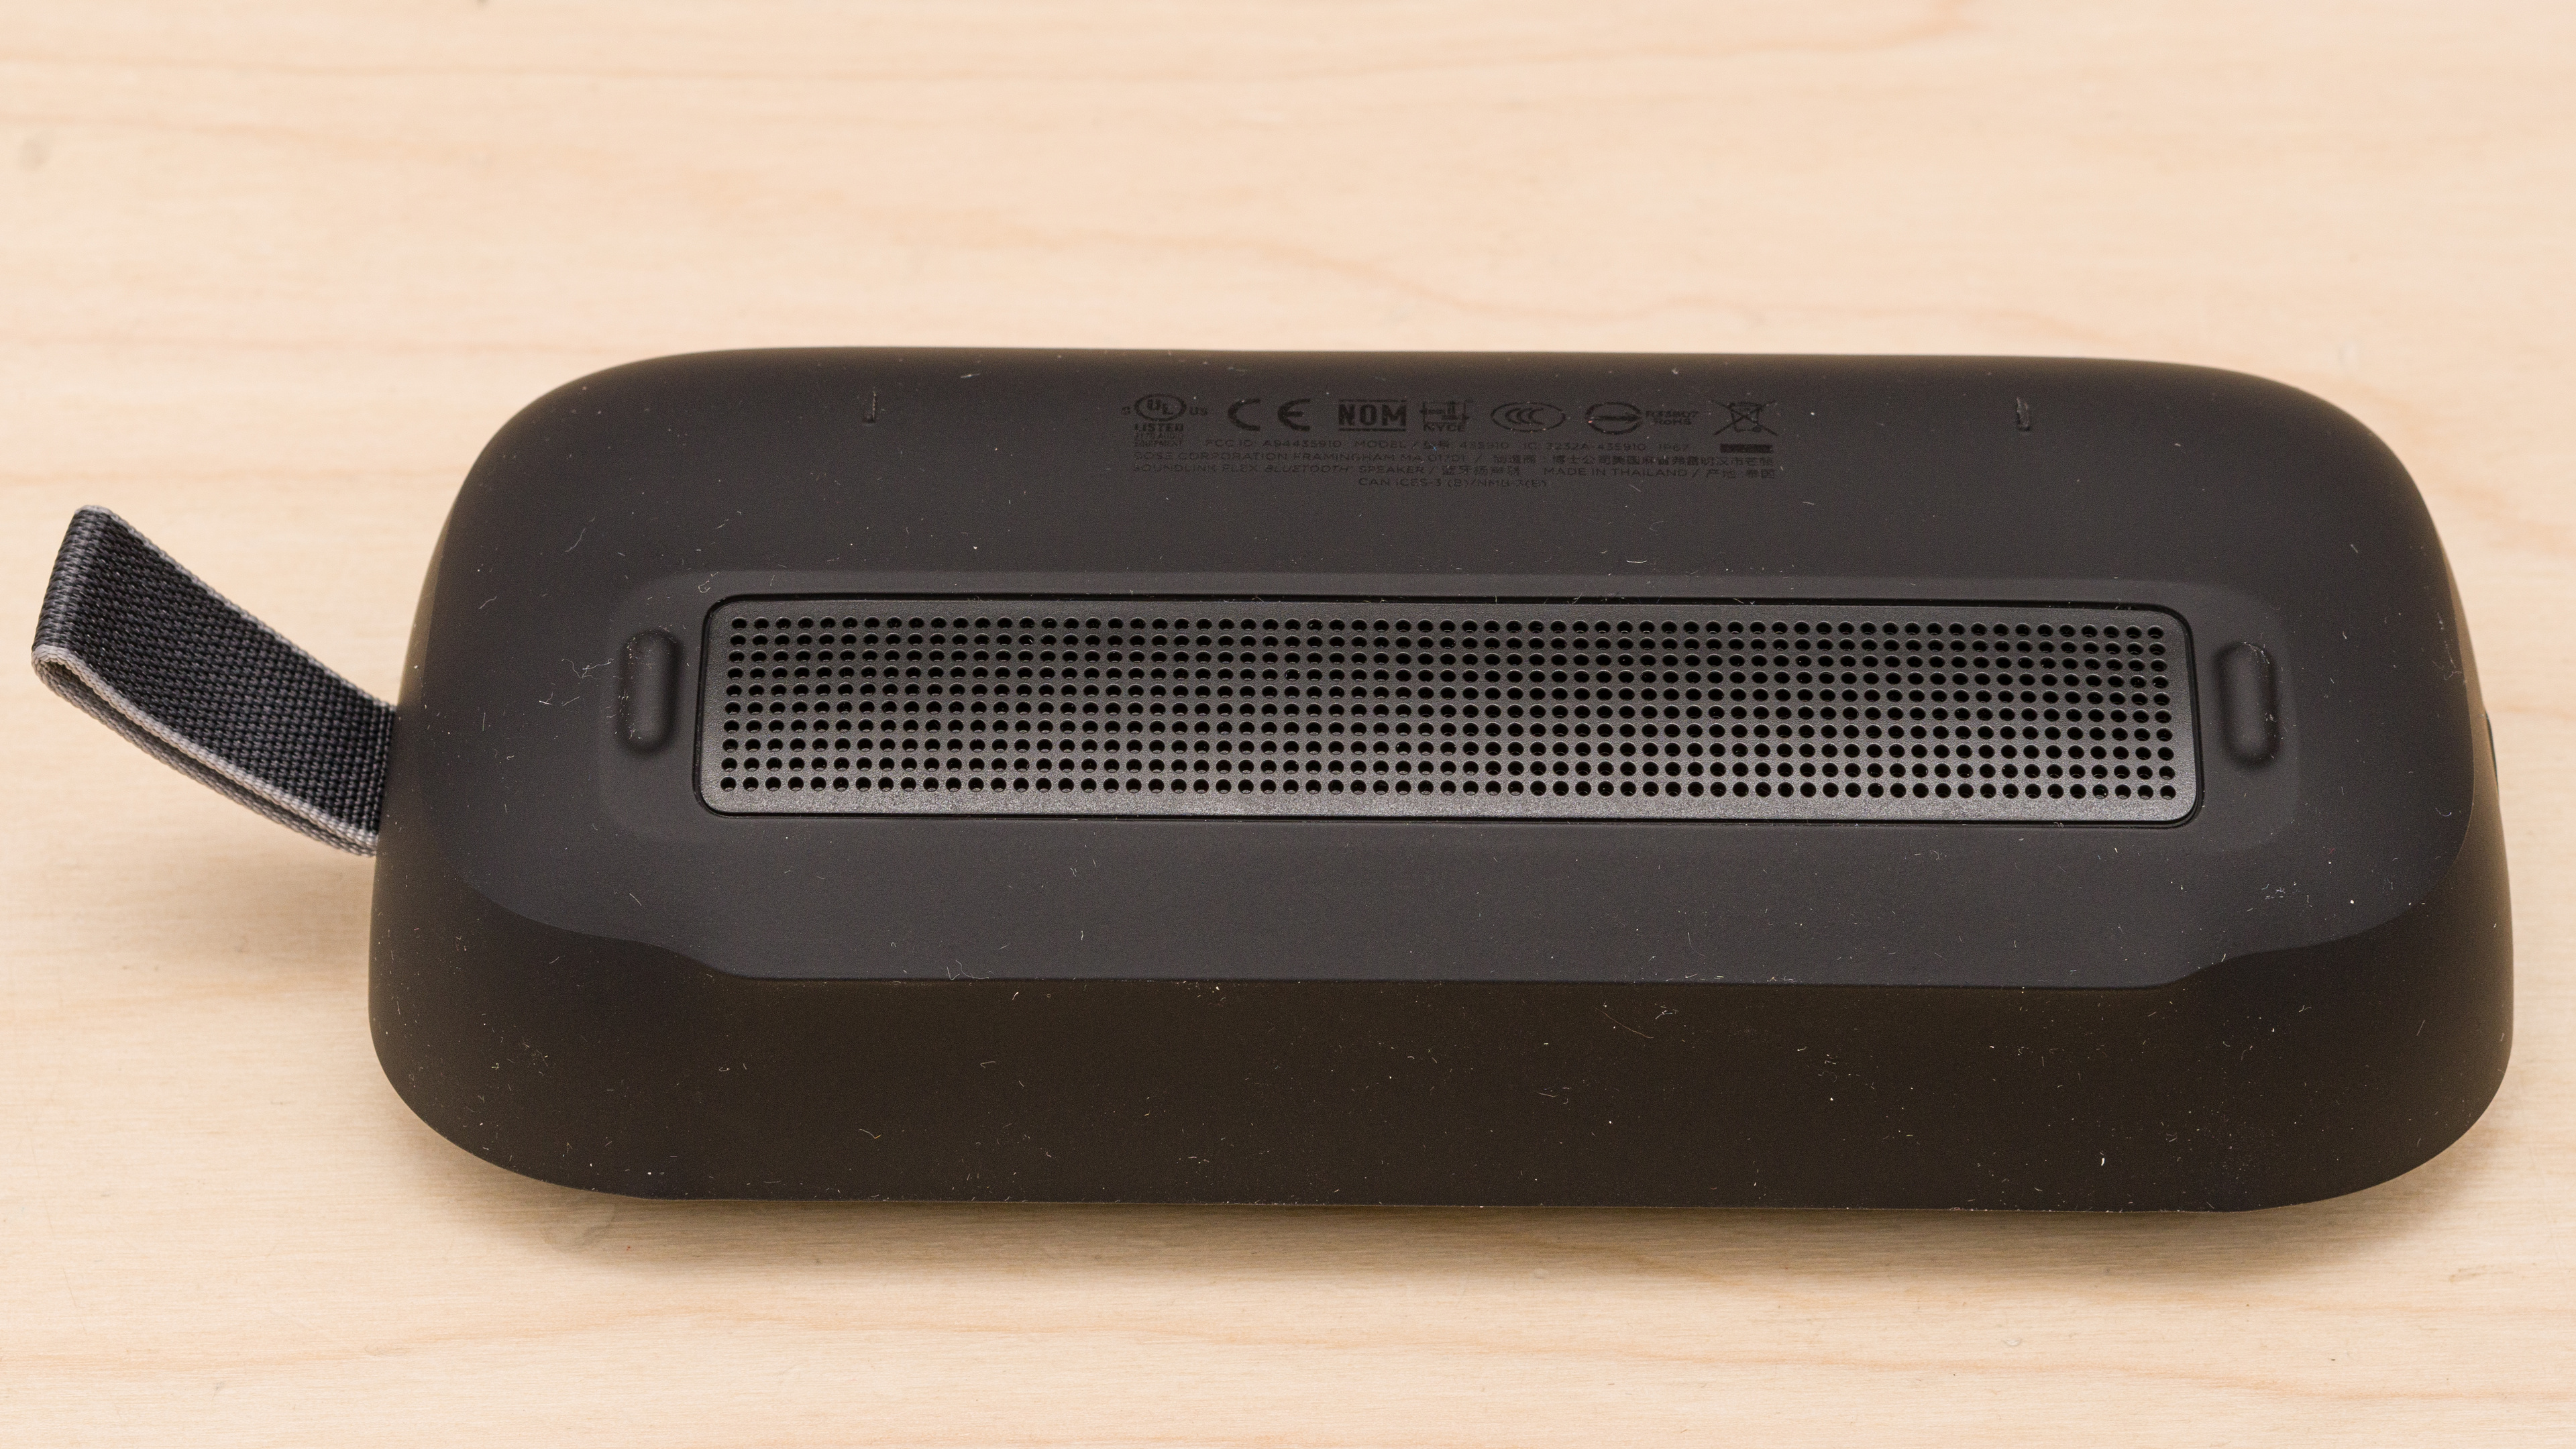 Bose Soundlink Flex Bluetooth speaker has a portable design and